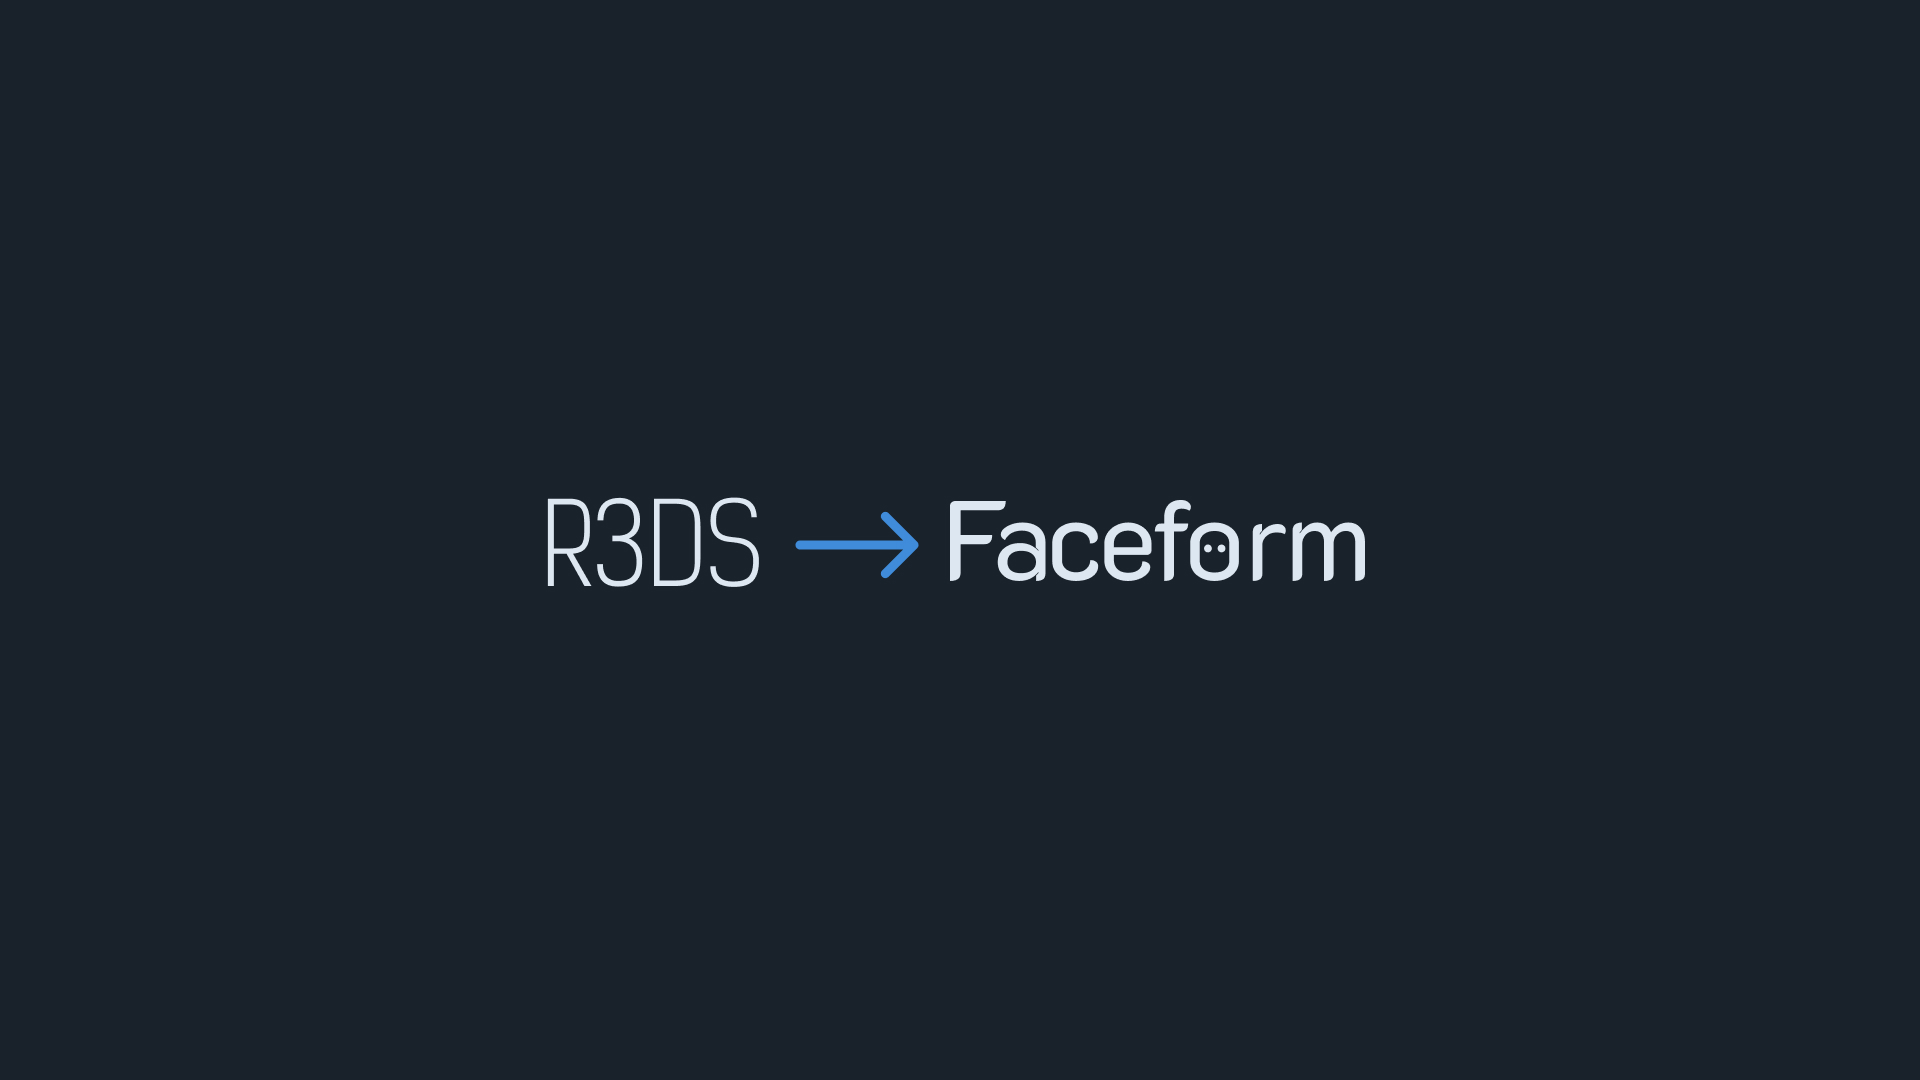 R3DS is now Faceform